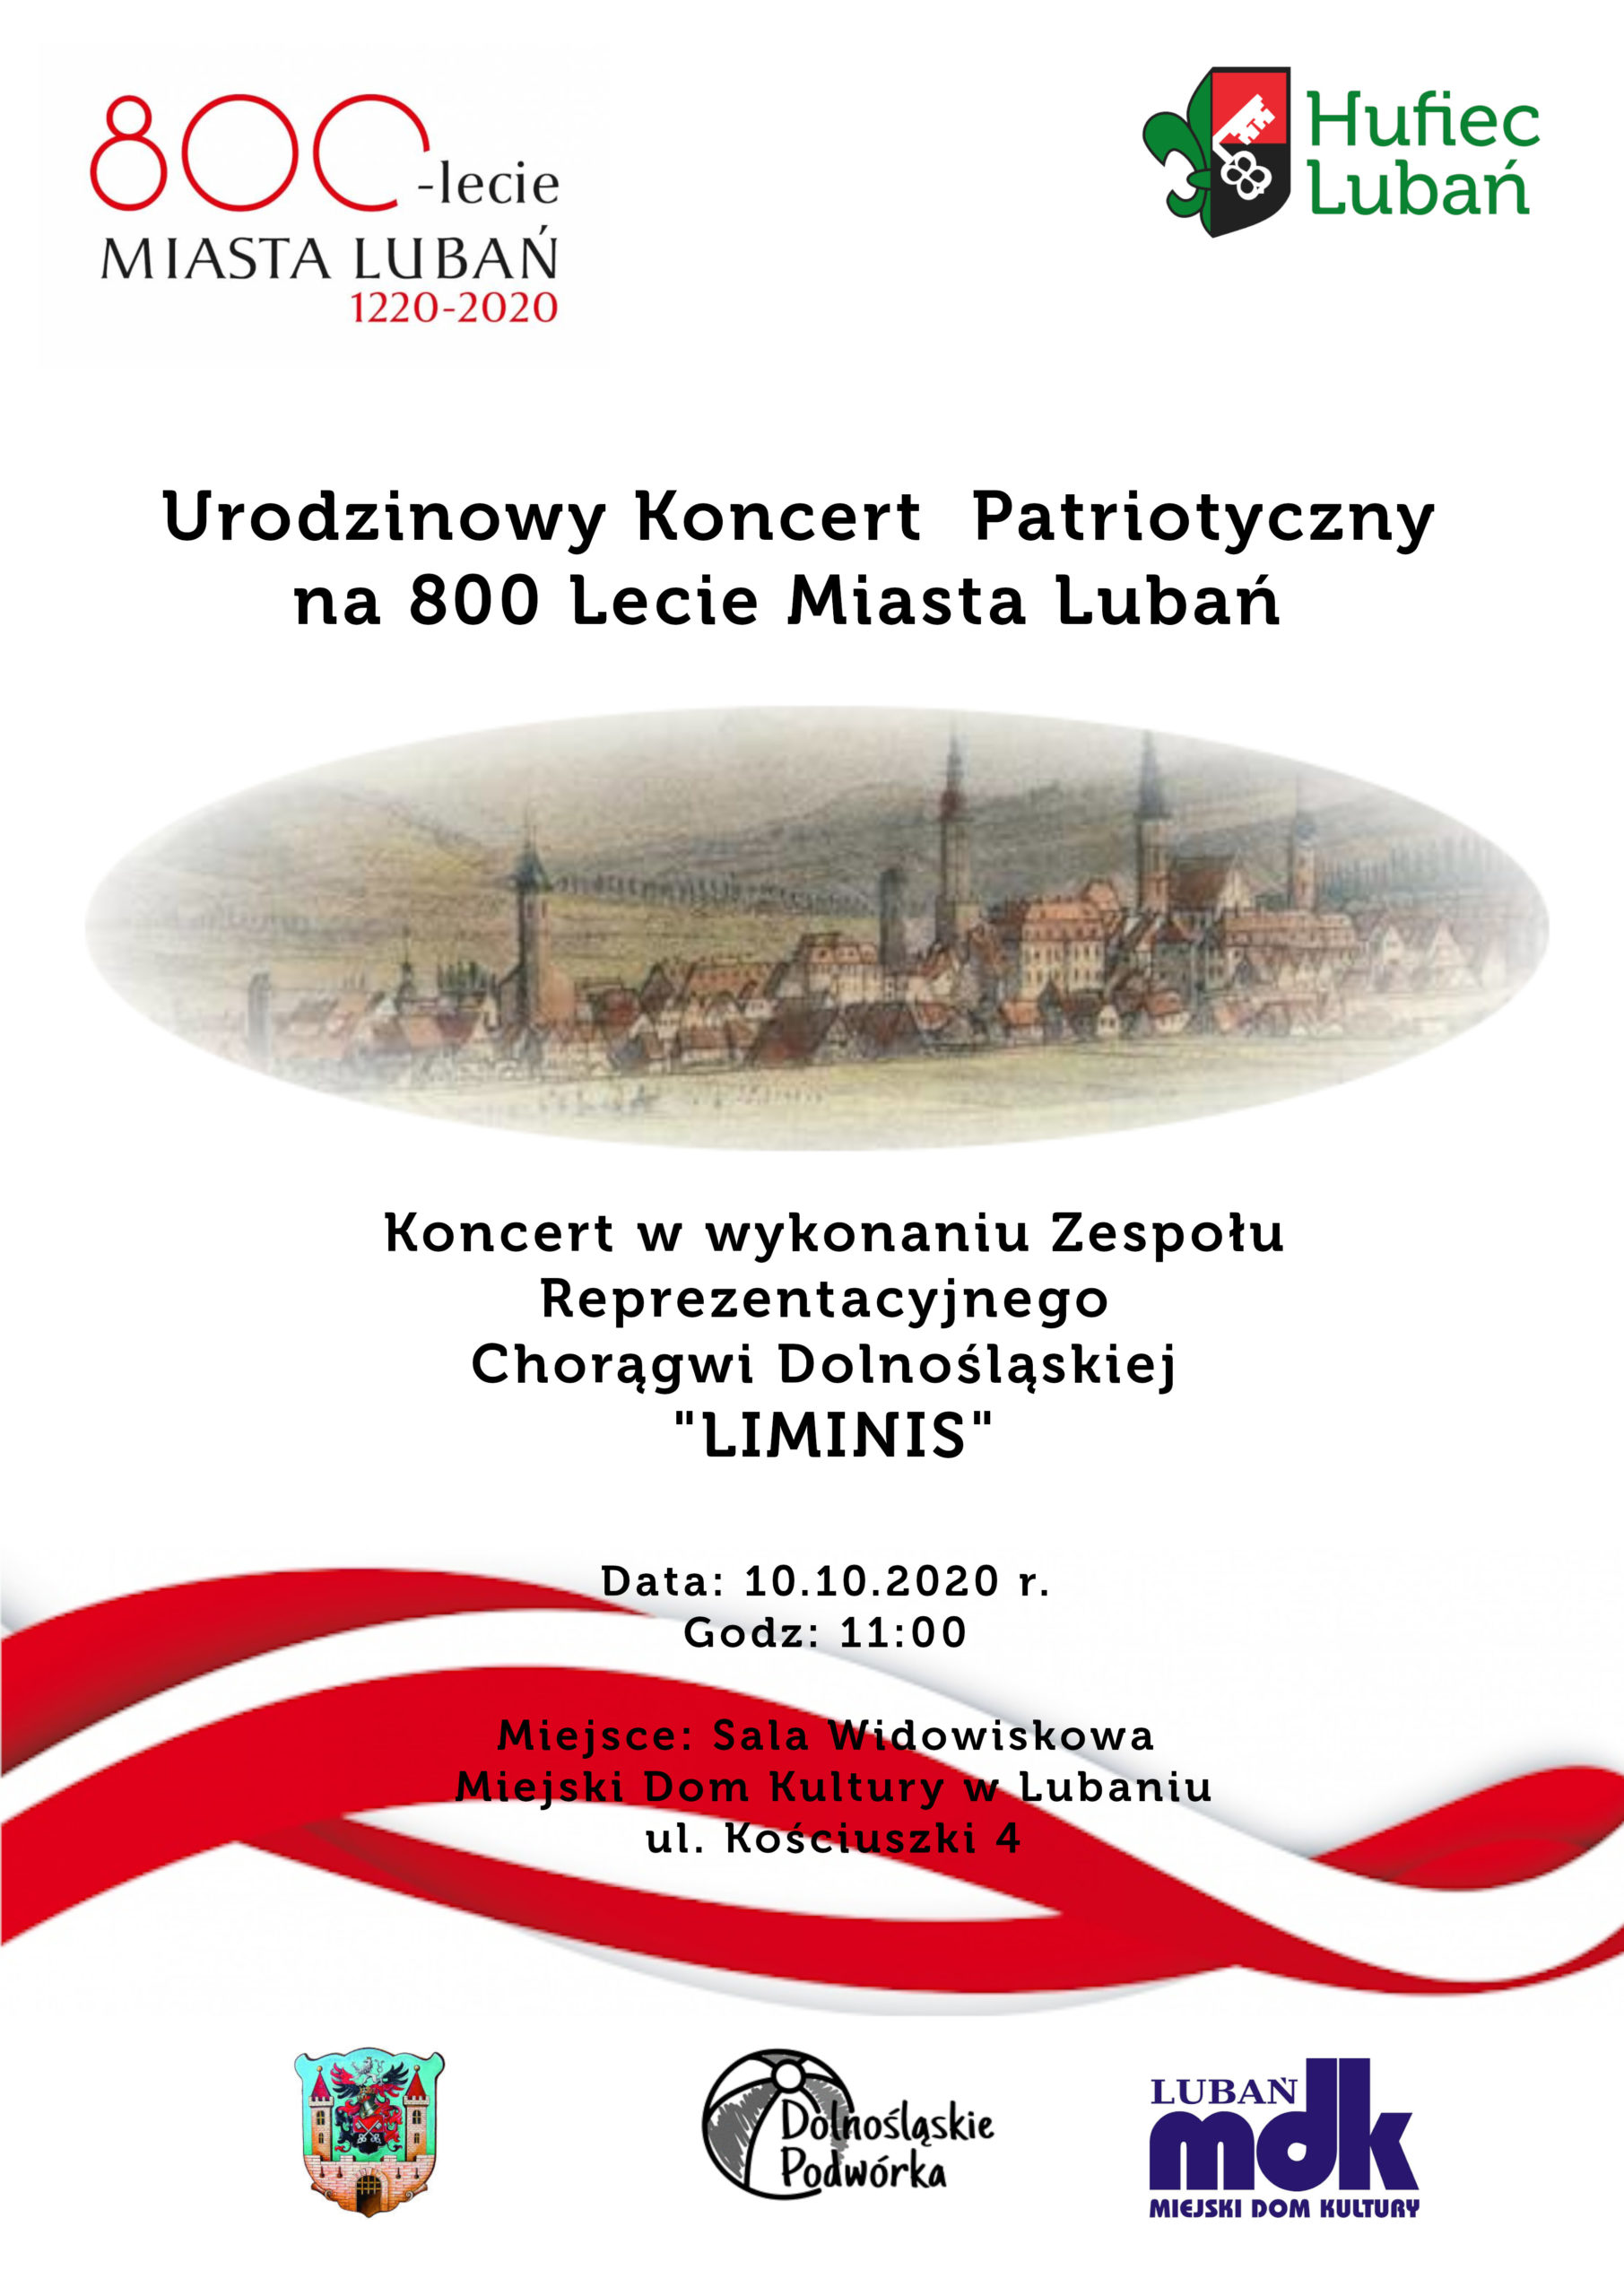 Koncert Patriotyczny na 800 Lecie Miasta Lubań